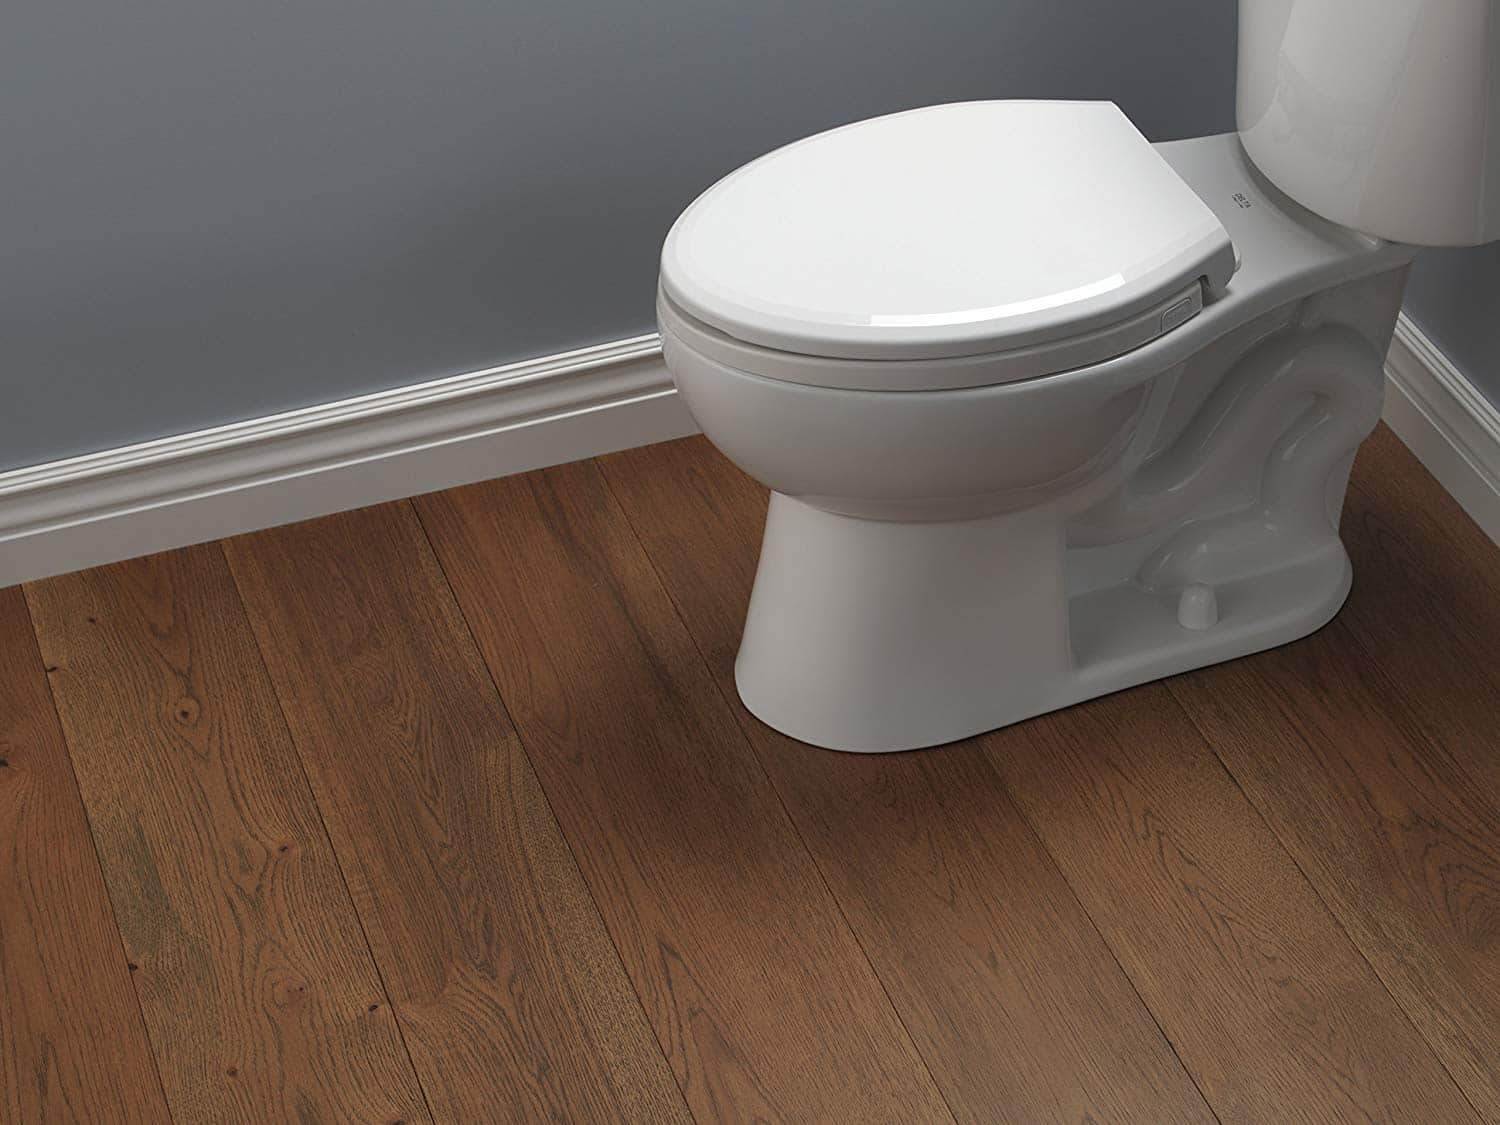 brown padded toilet seat